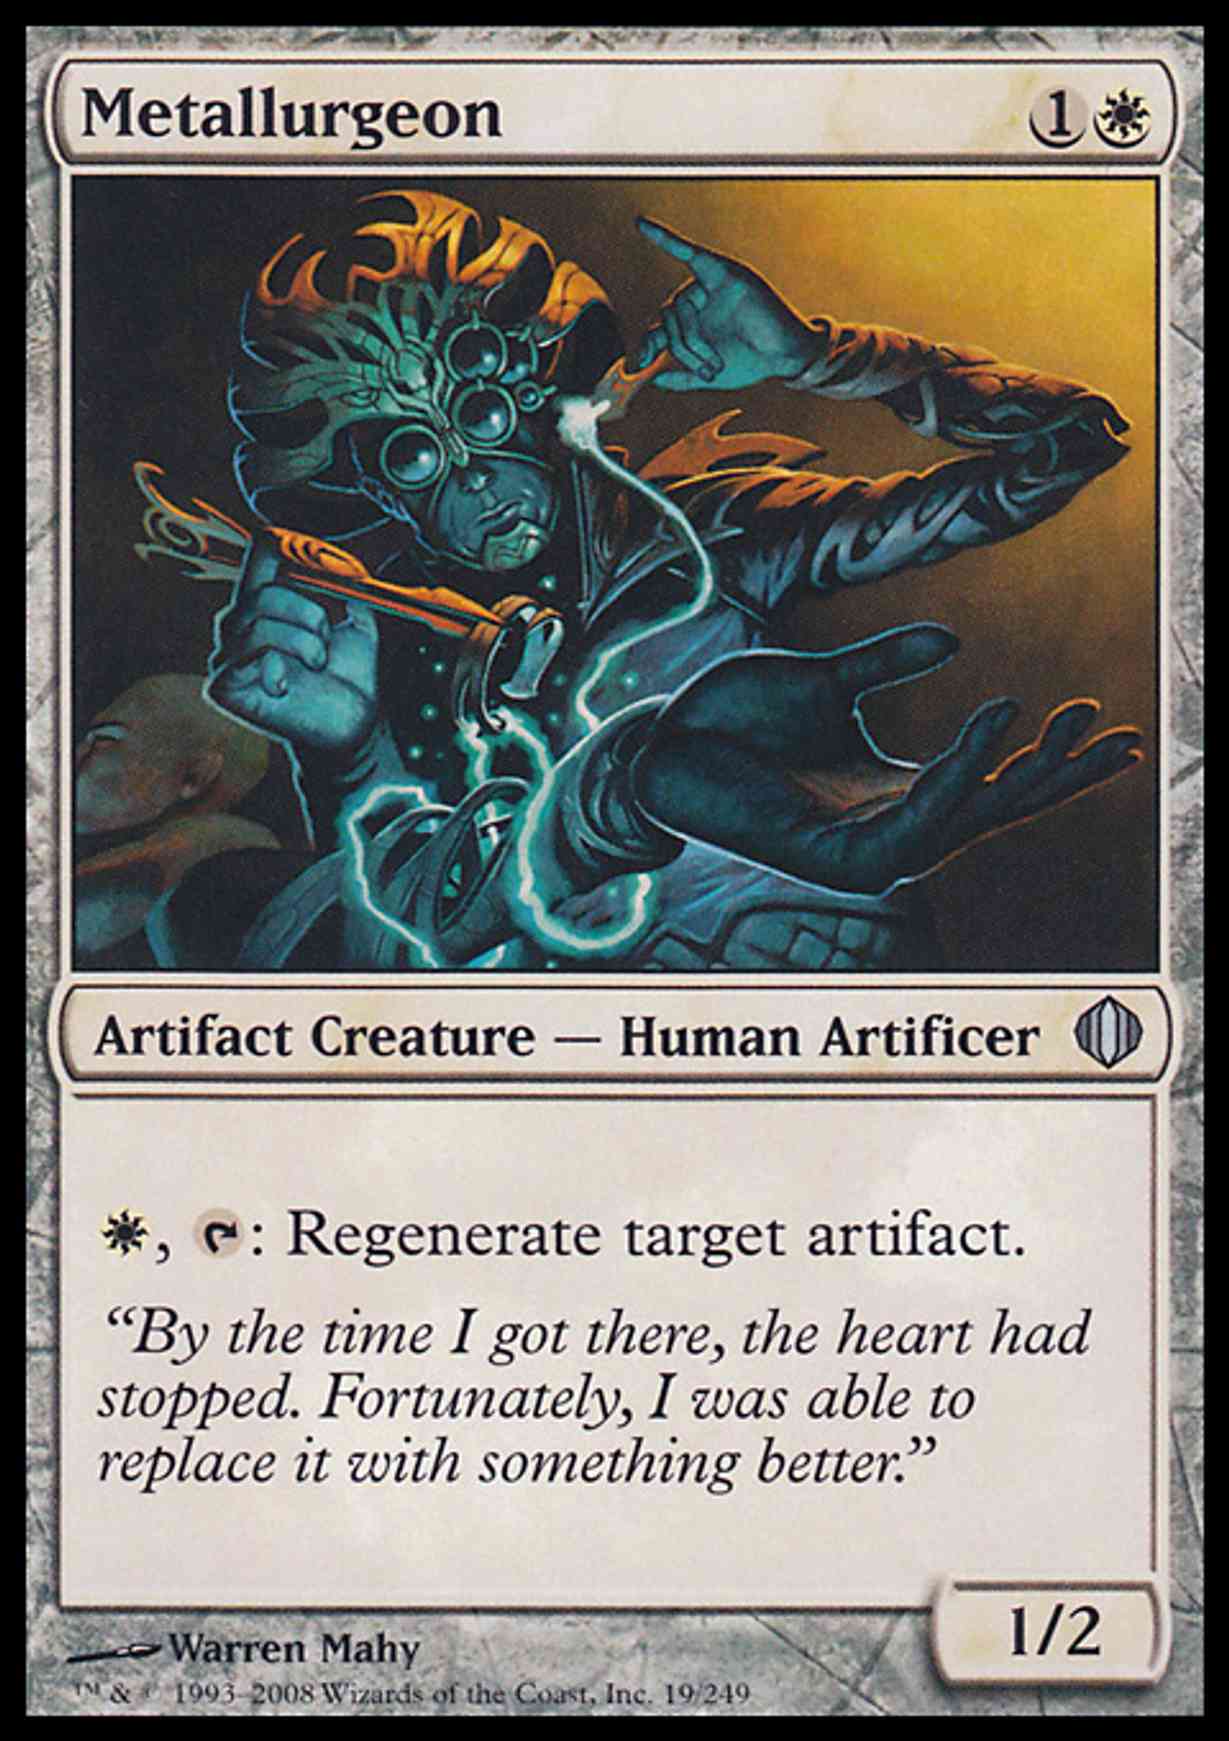 Metallurgeon magic card front